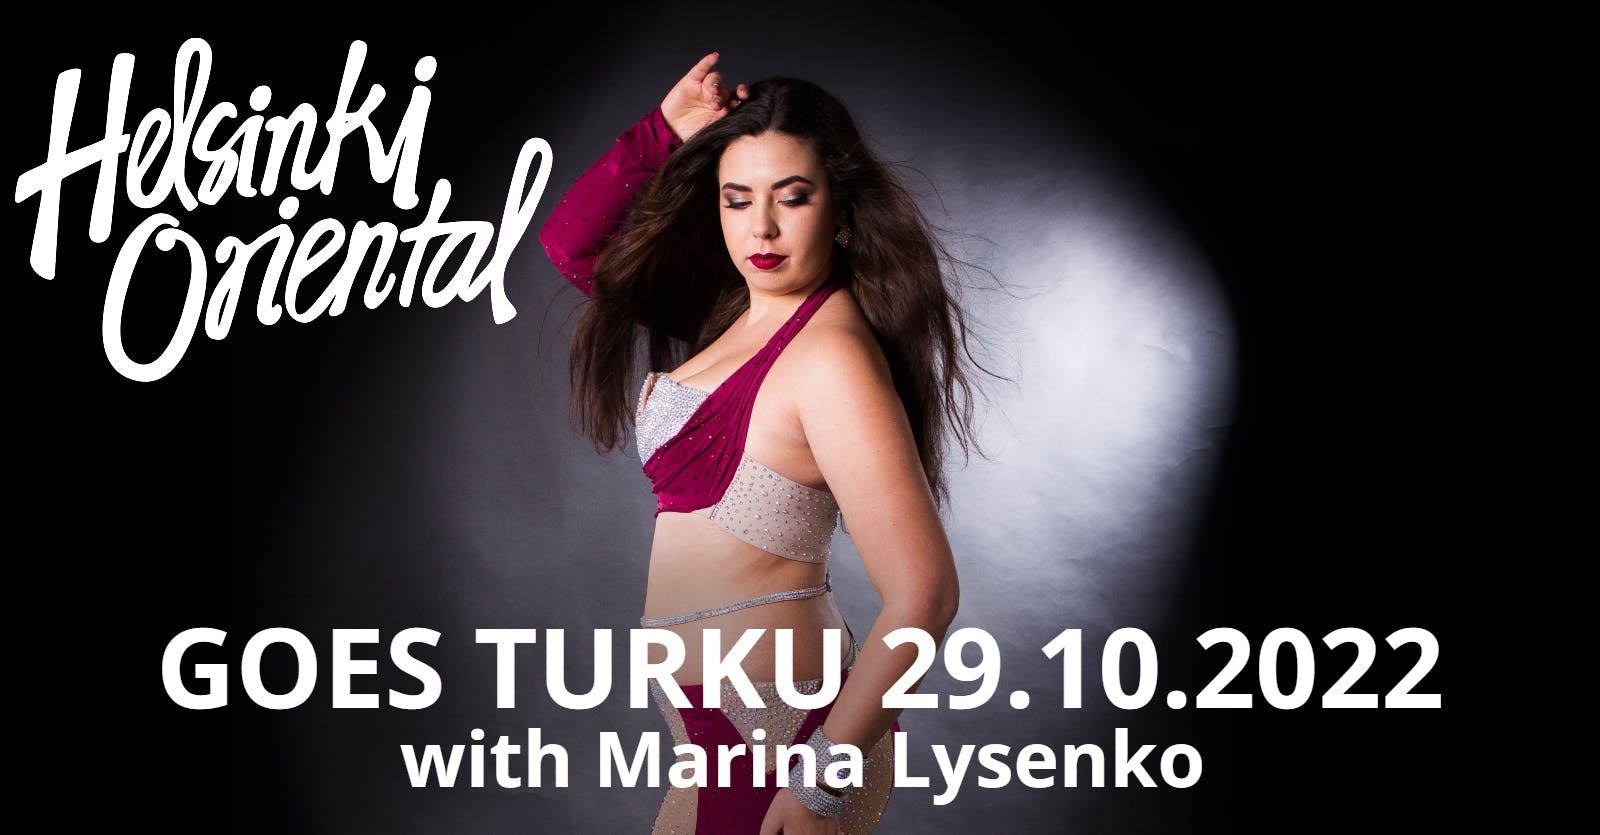 Helsinki Oriental Goes Turku with Marina Lysenko 29.10.2022